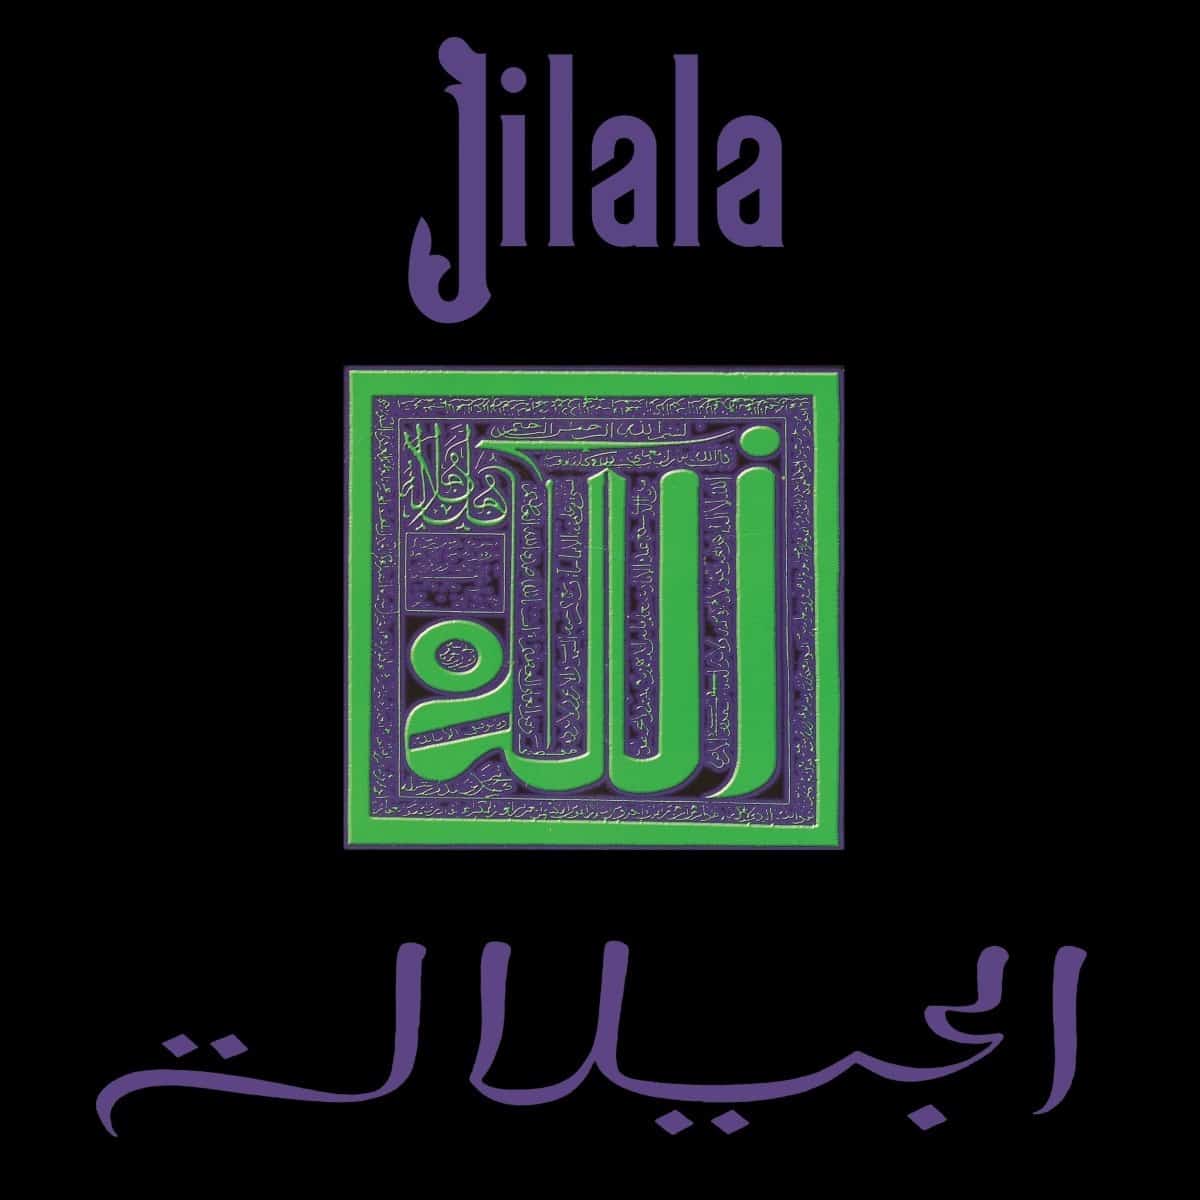 JILALA - Jilala - LP - 180g Limited Vinyl